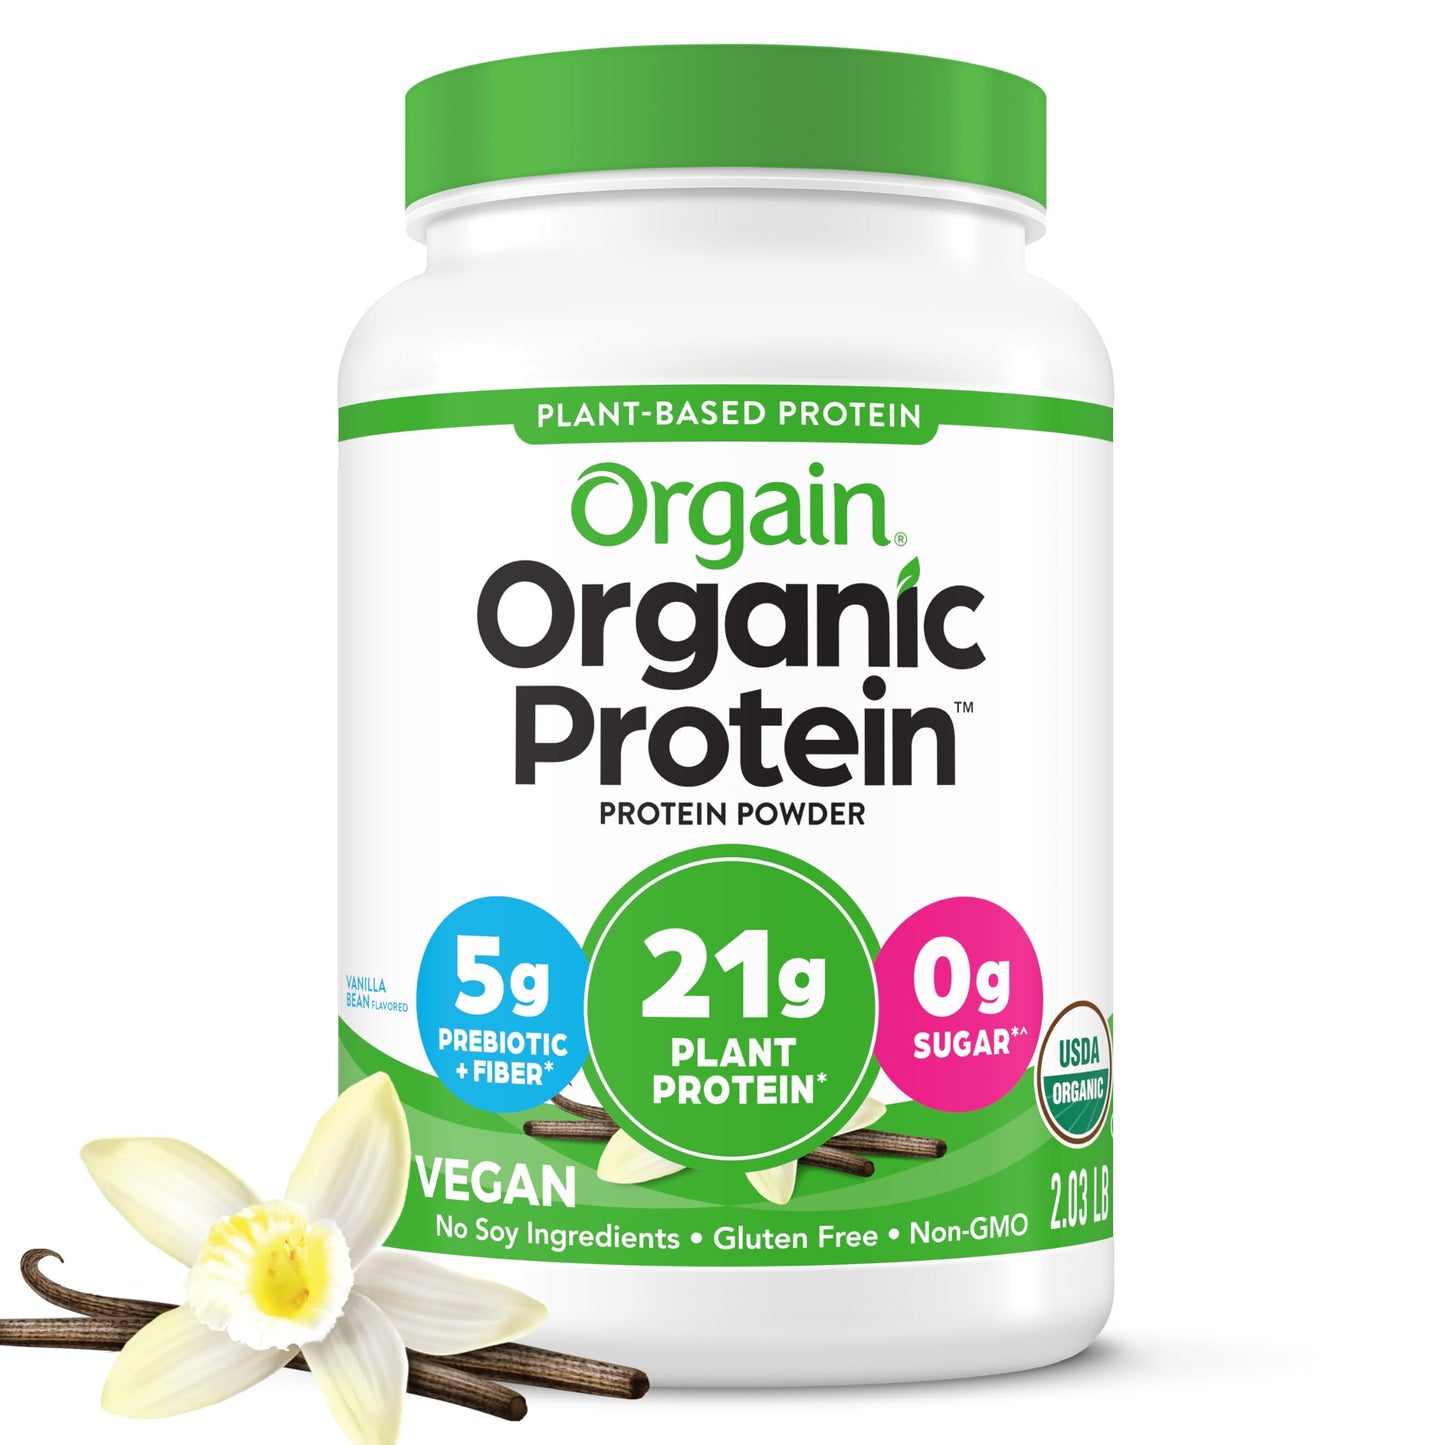 Orgain Organic Vegan Protein Powder, Vanilla Bean - 21g Plant Based Protein, Gluten Free, Dairy Free, Lactose Free, Soy Free, No Sugar Added, Kosher, For Smoothies & Shakes - 2.03lb